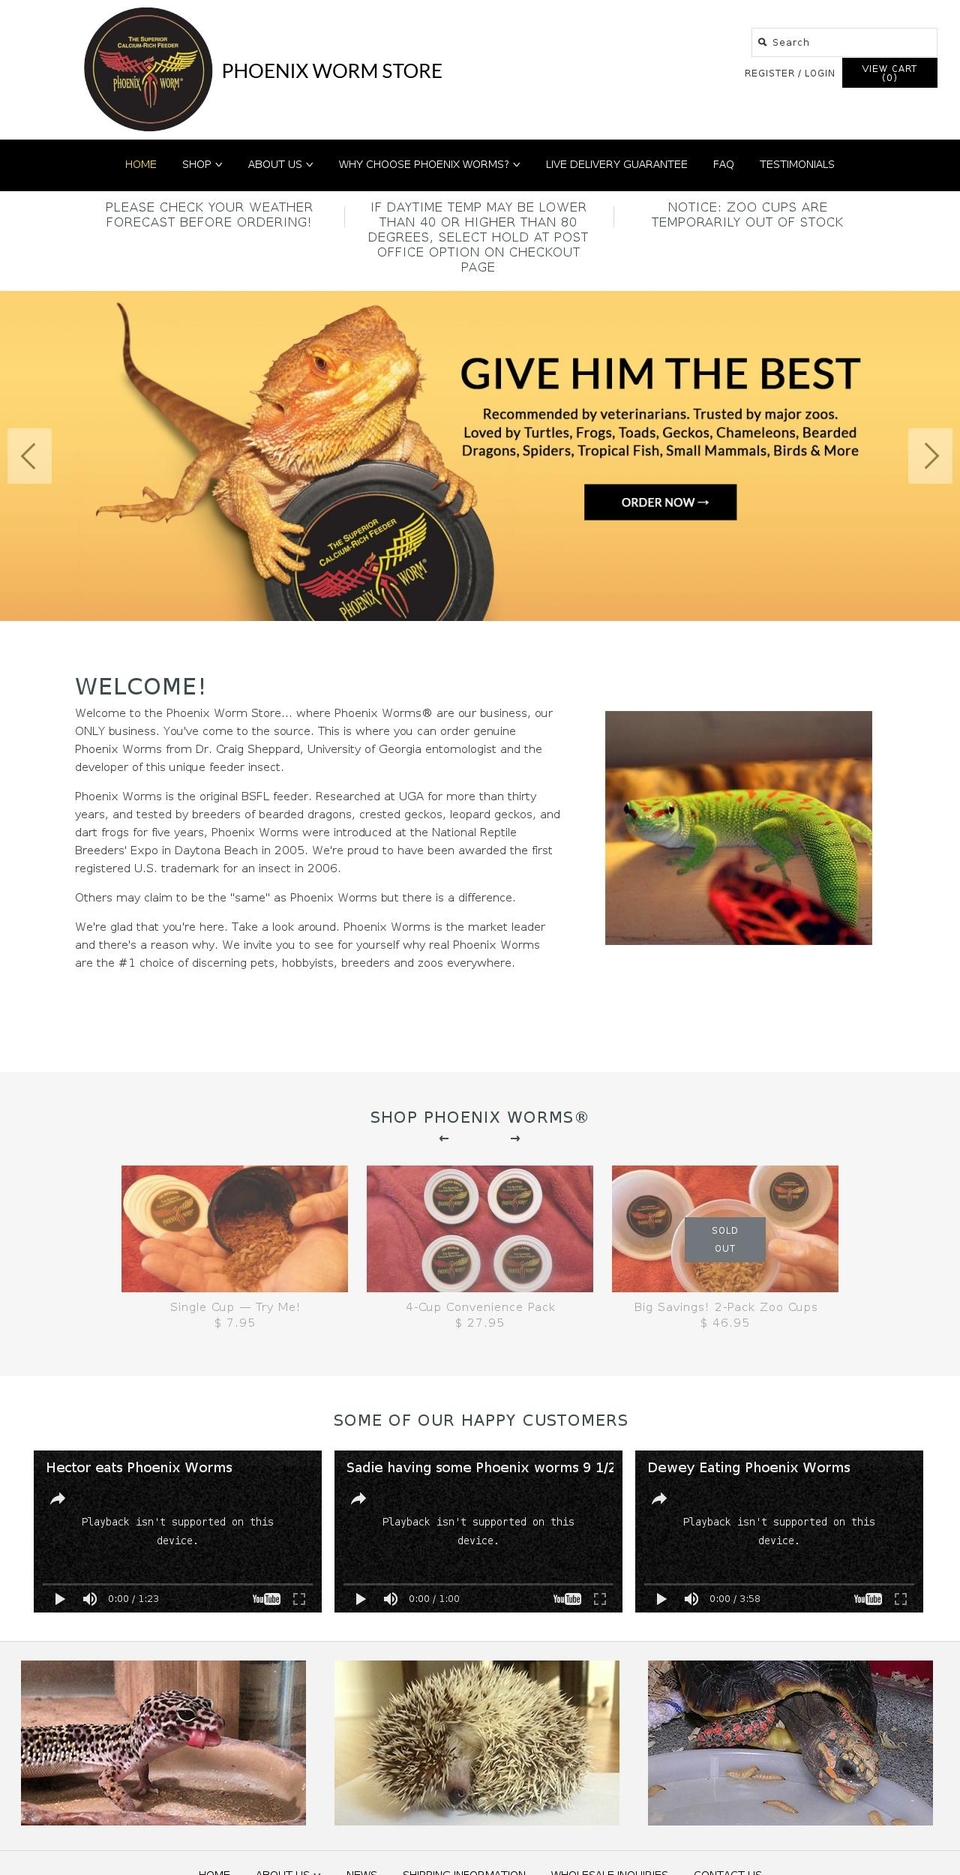 phoenixworm.com shopify website screenshot